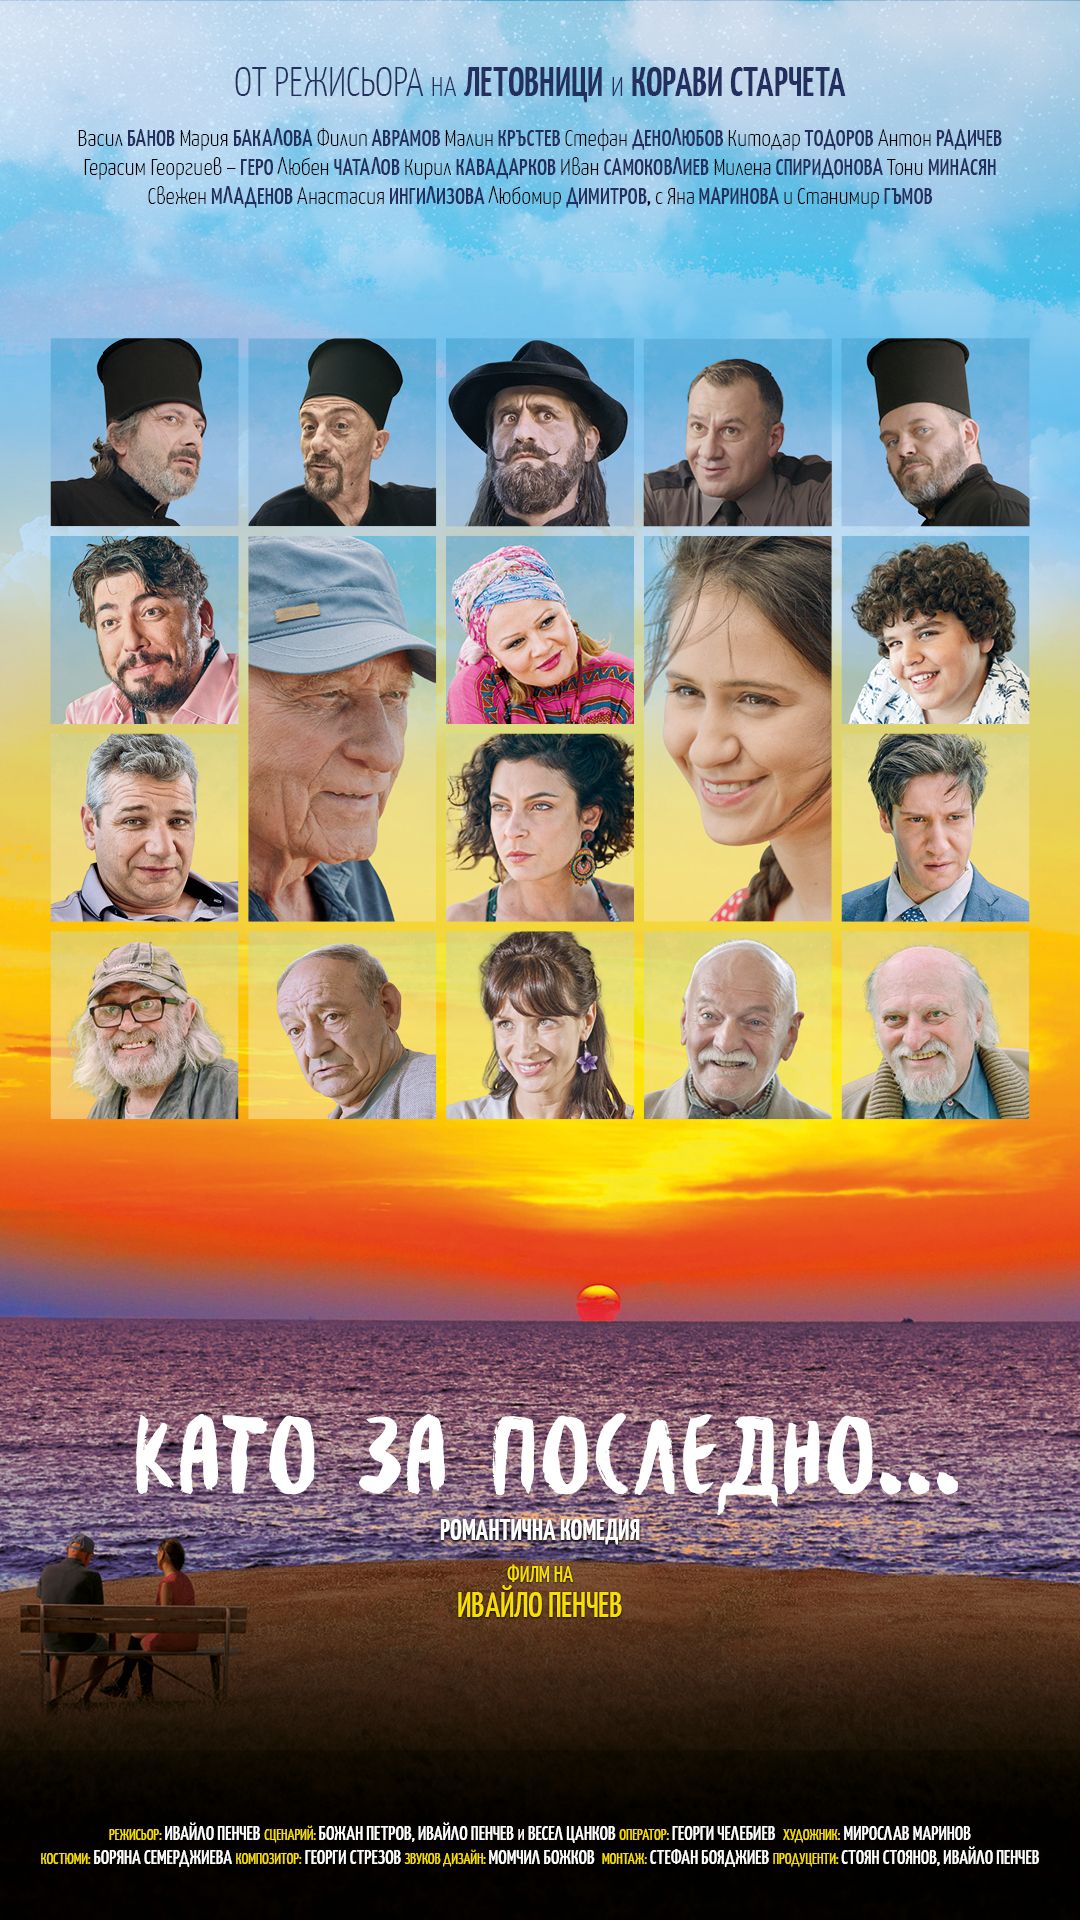 Euro Cinema: Кино програма - 27.08 - 02.09.2021